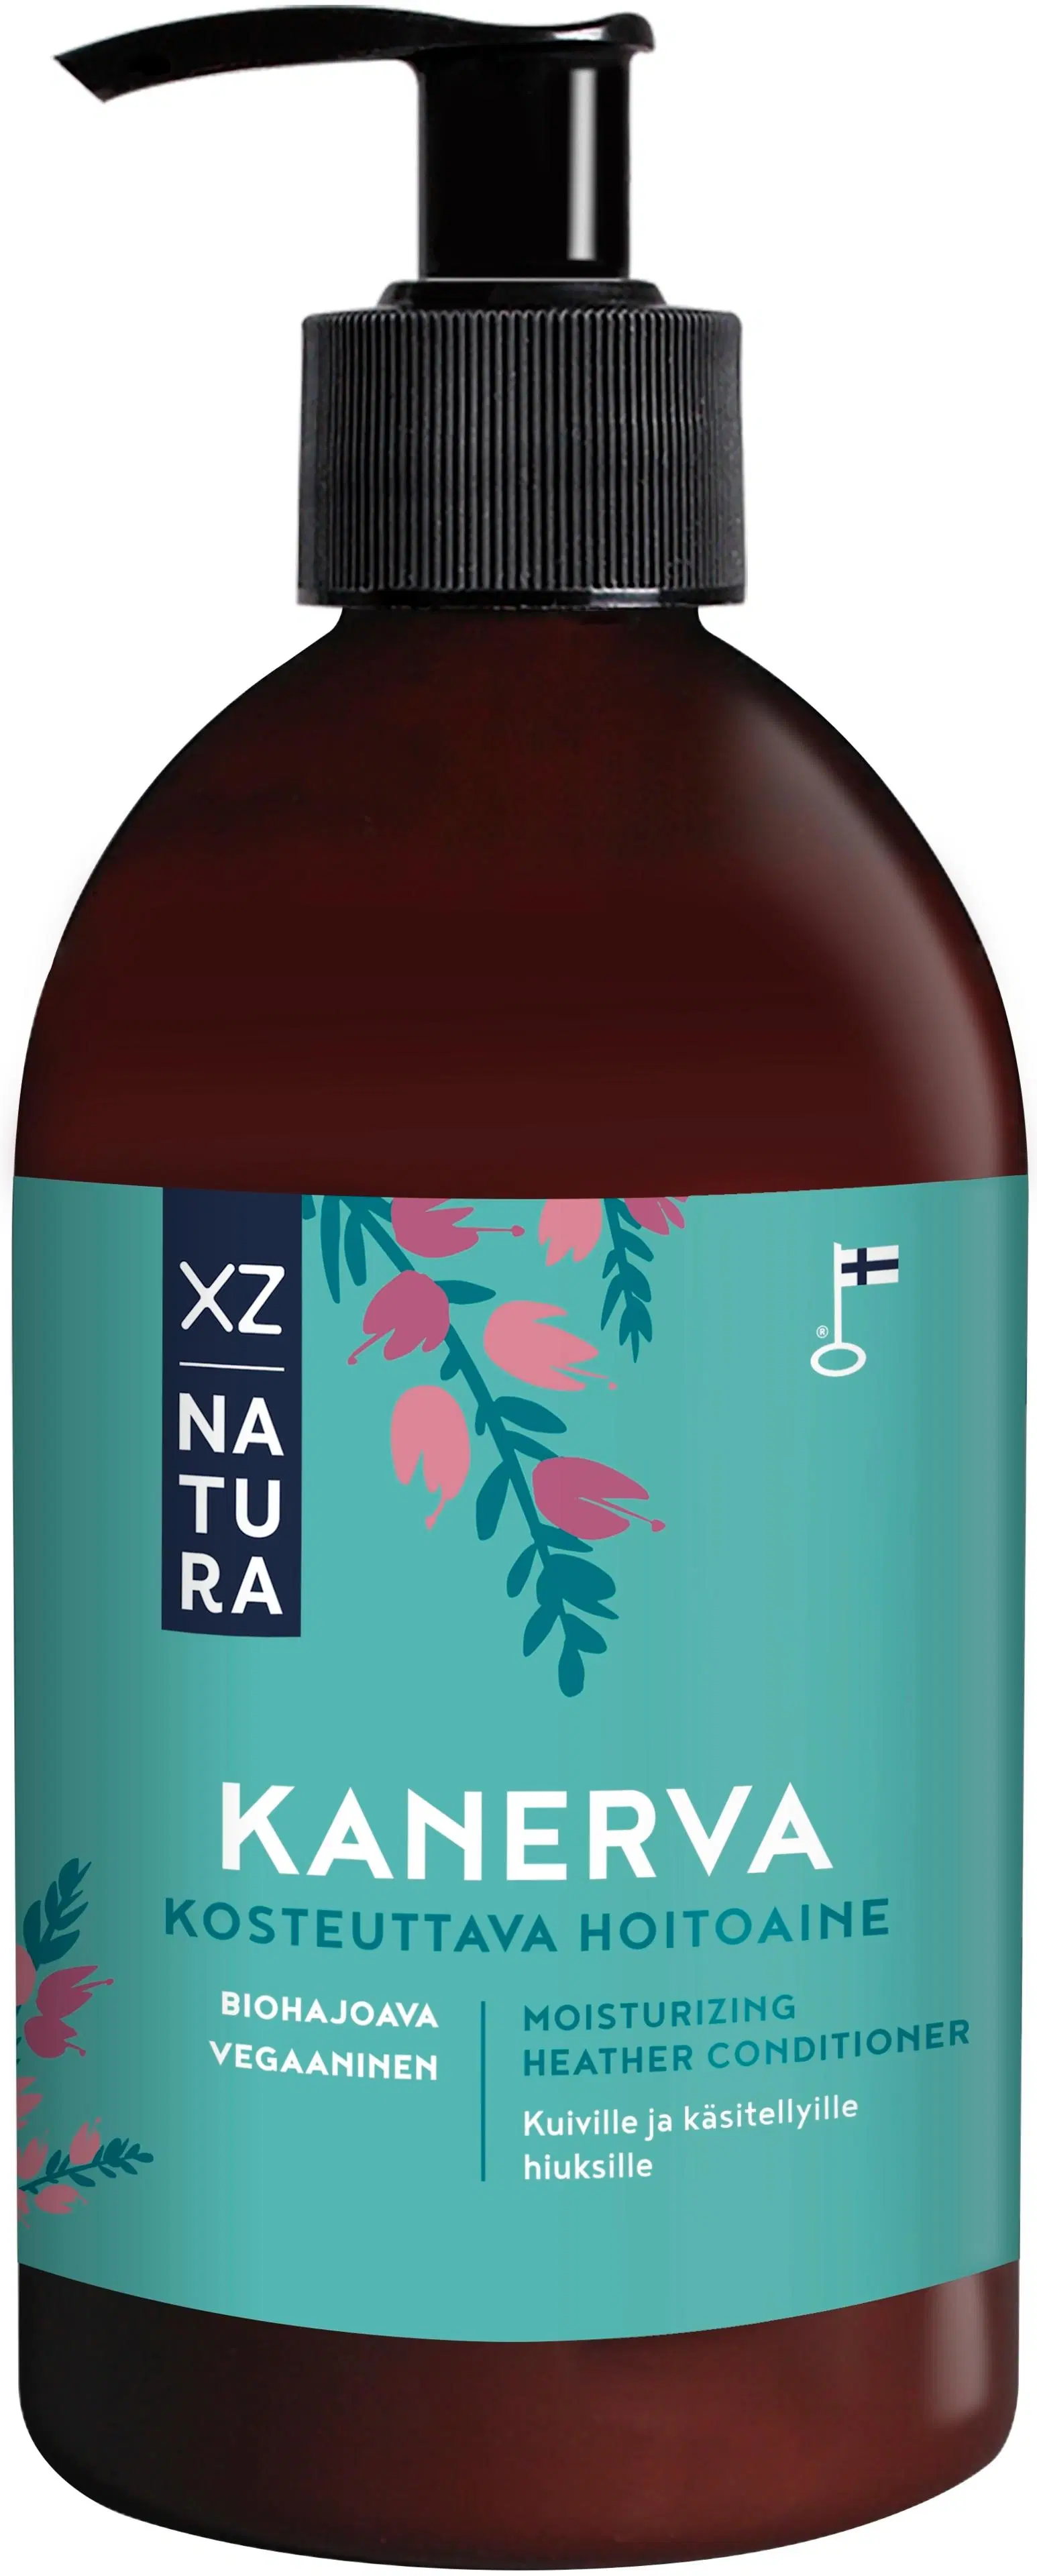 XZ Natura 375ml Kanerva hoitoaine